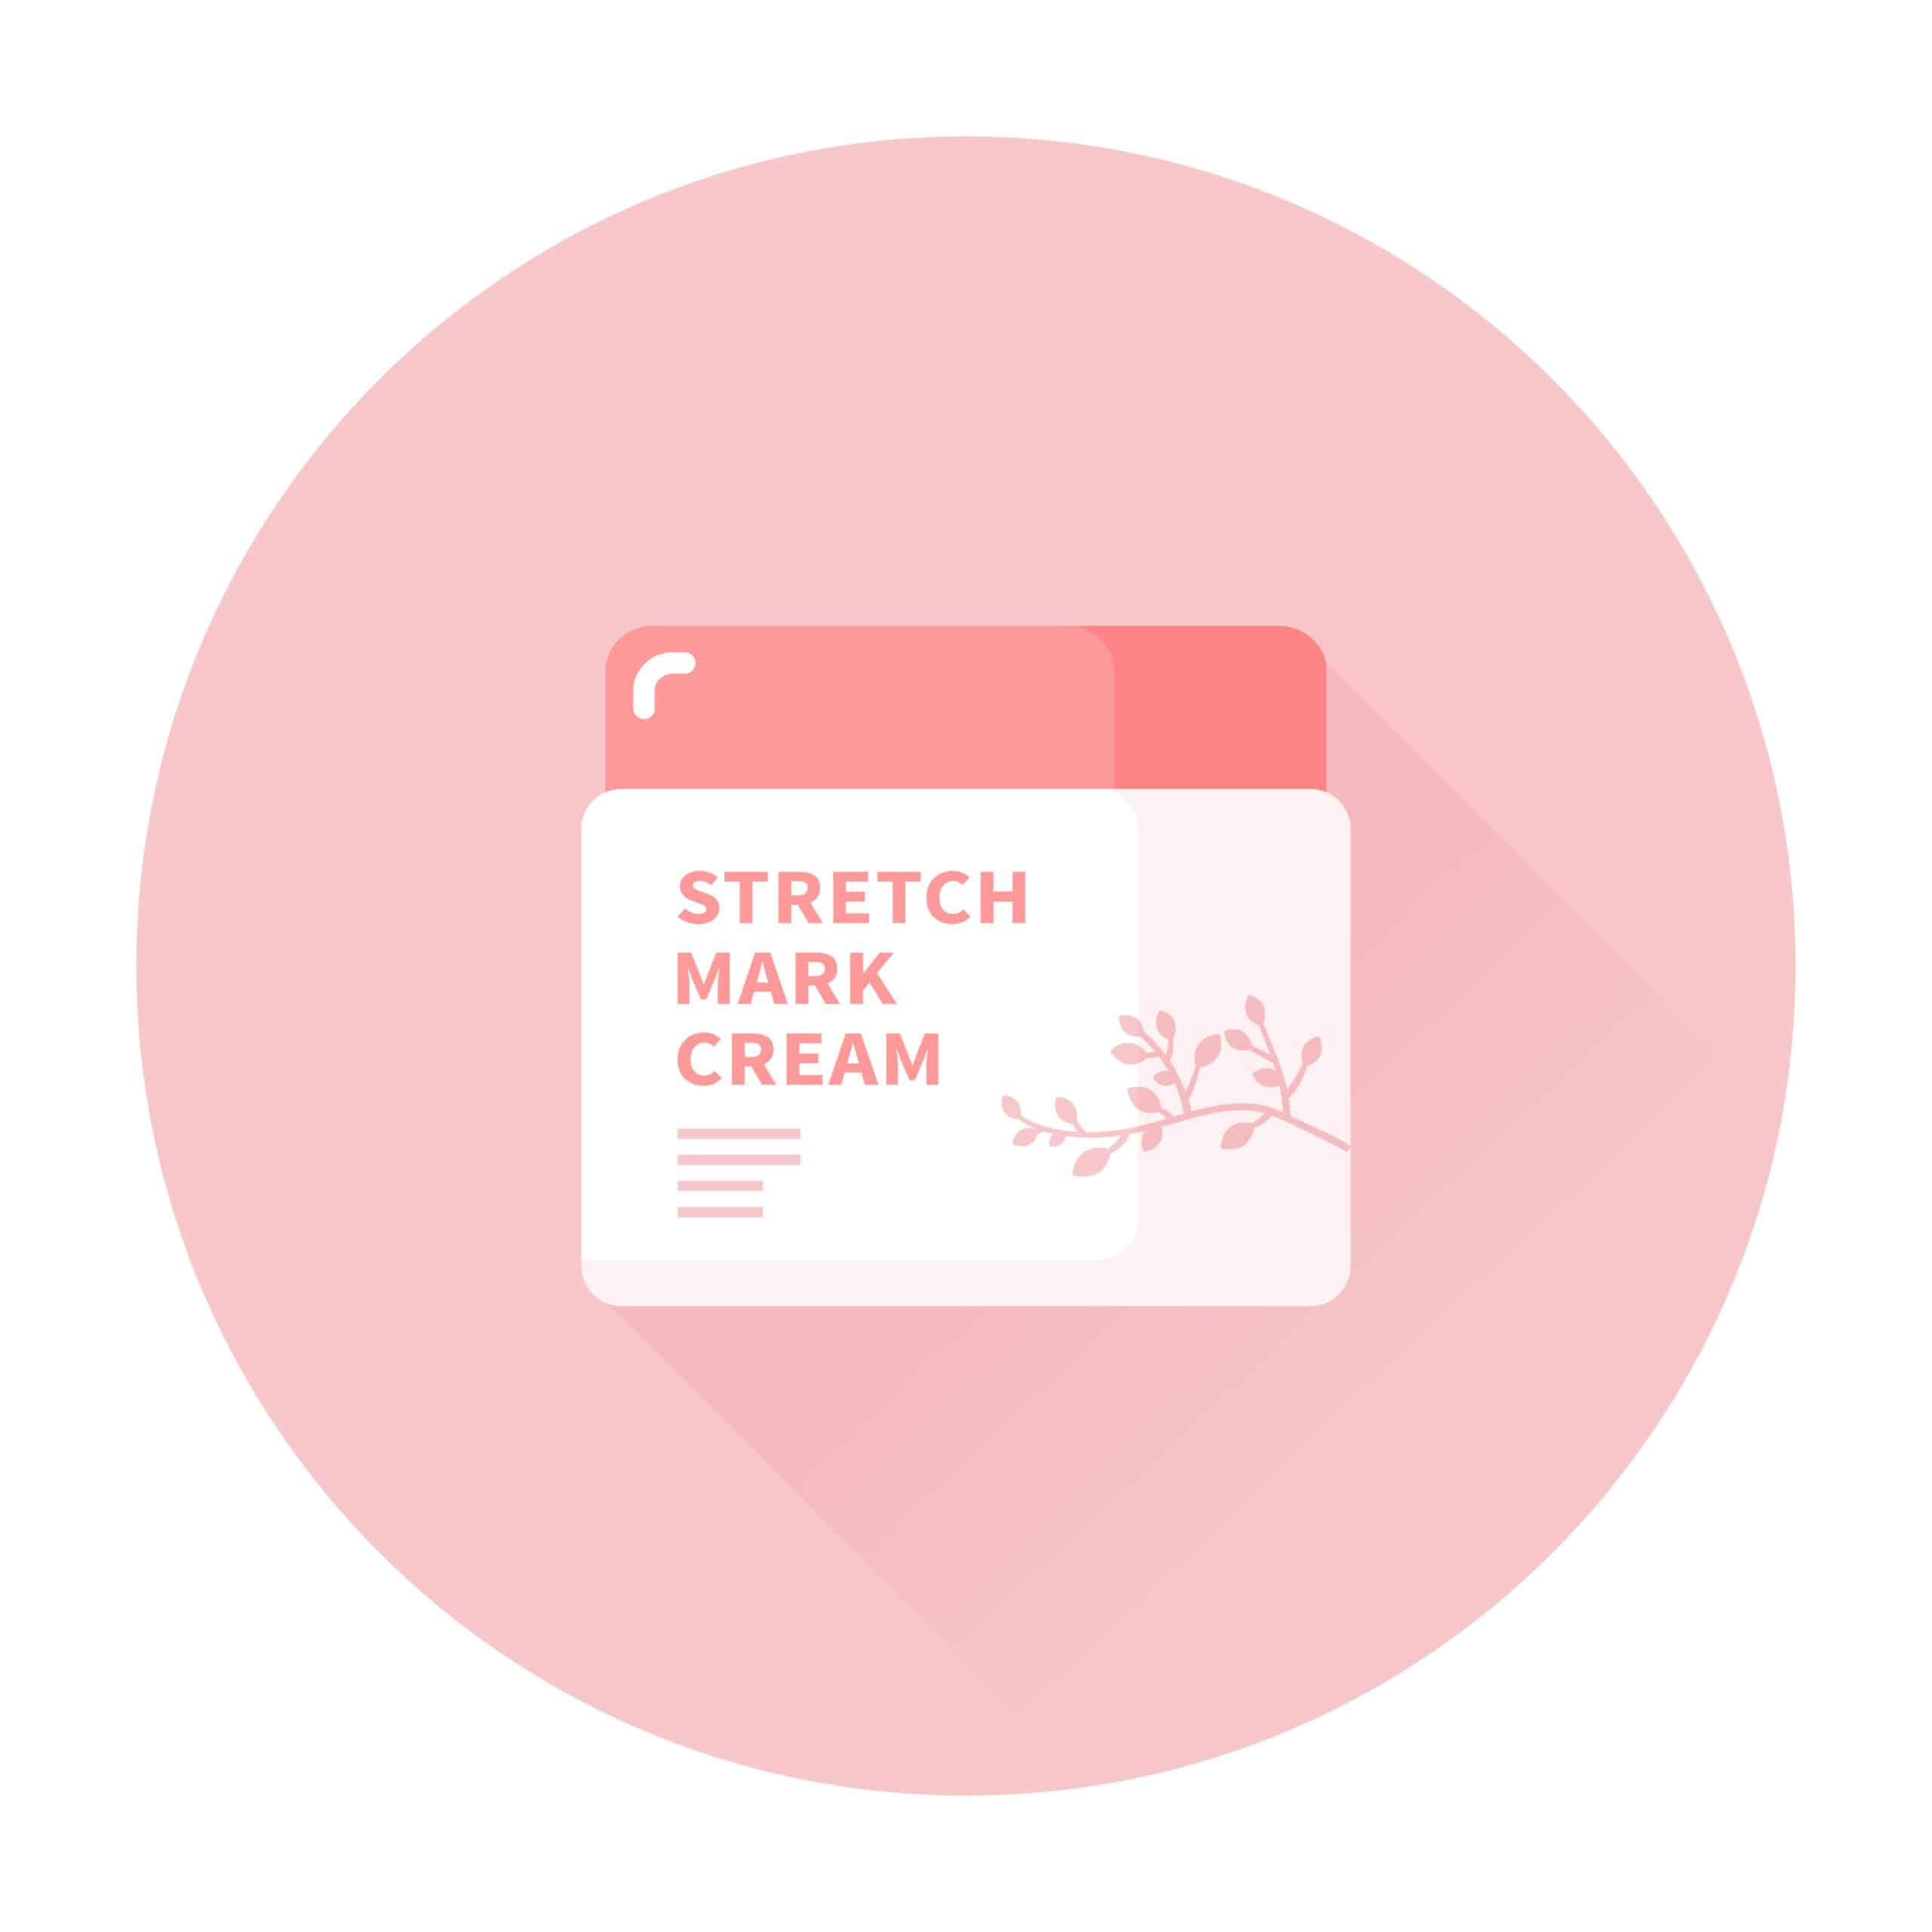 Graphic image of a pregnancy stretch mark cream